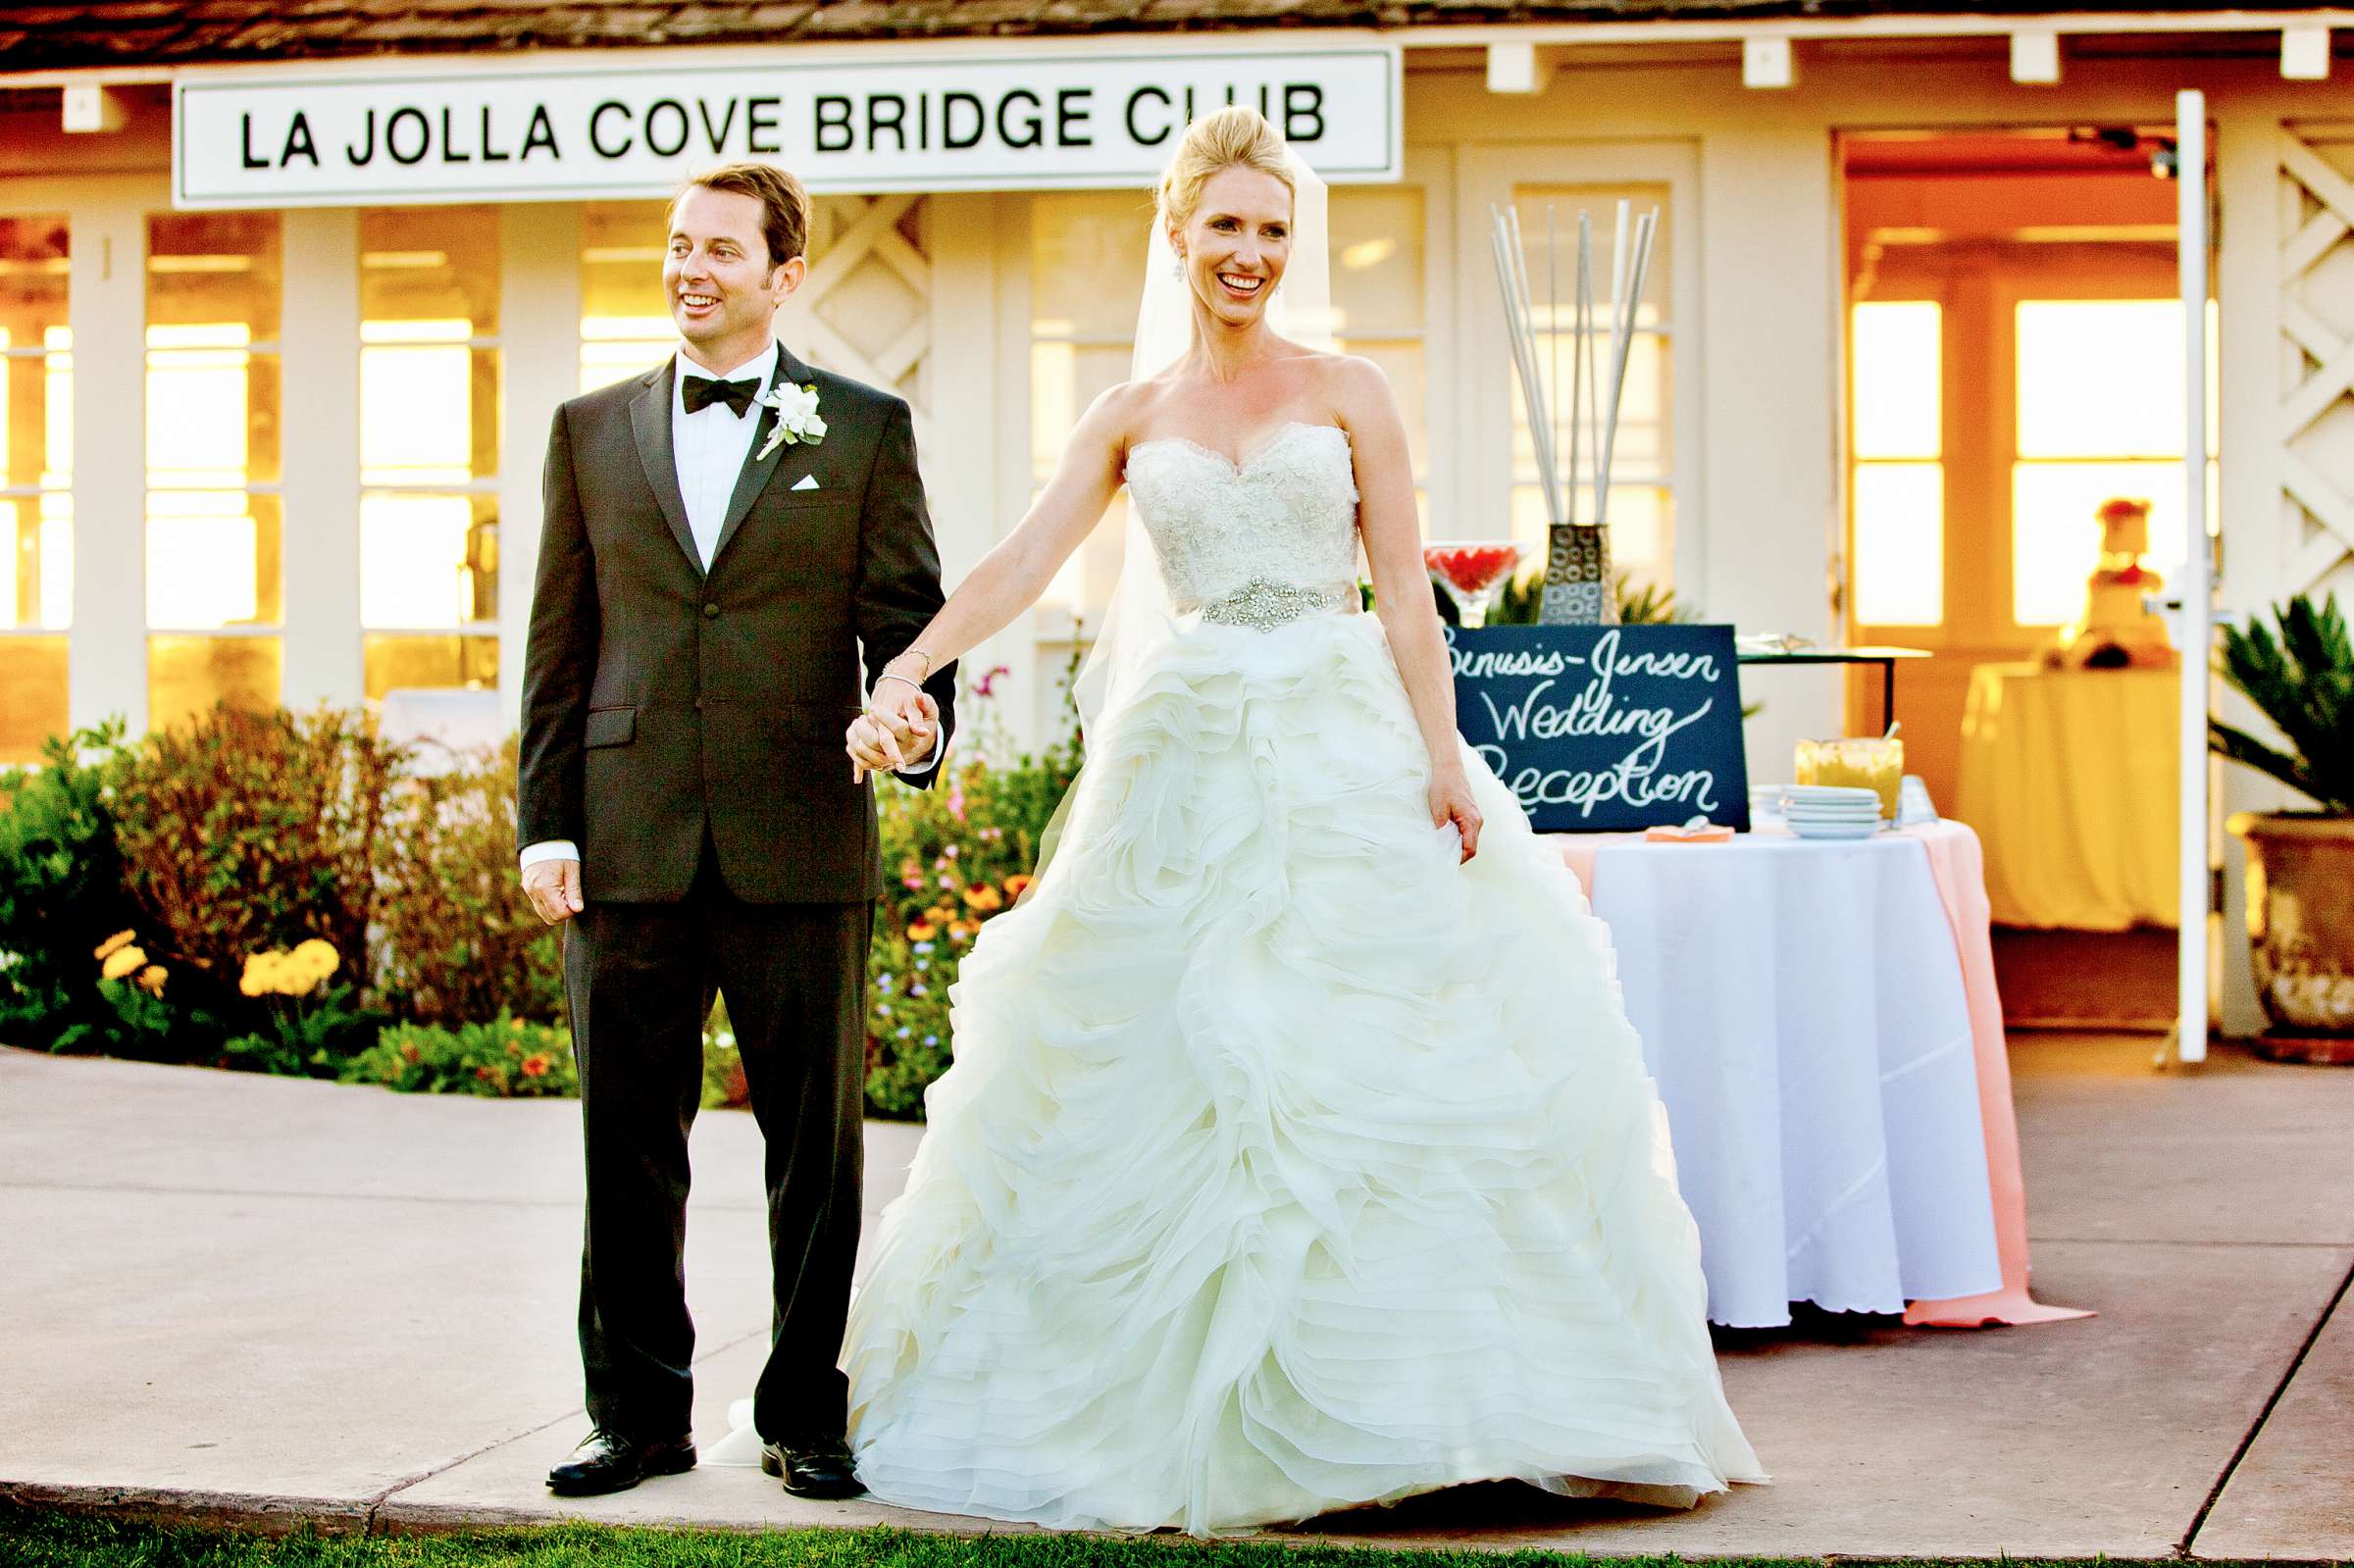 La Jolla Cove Bridge Club Wedding, Lara and Denis Wedding Photo #203857 by True Photography